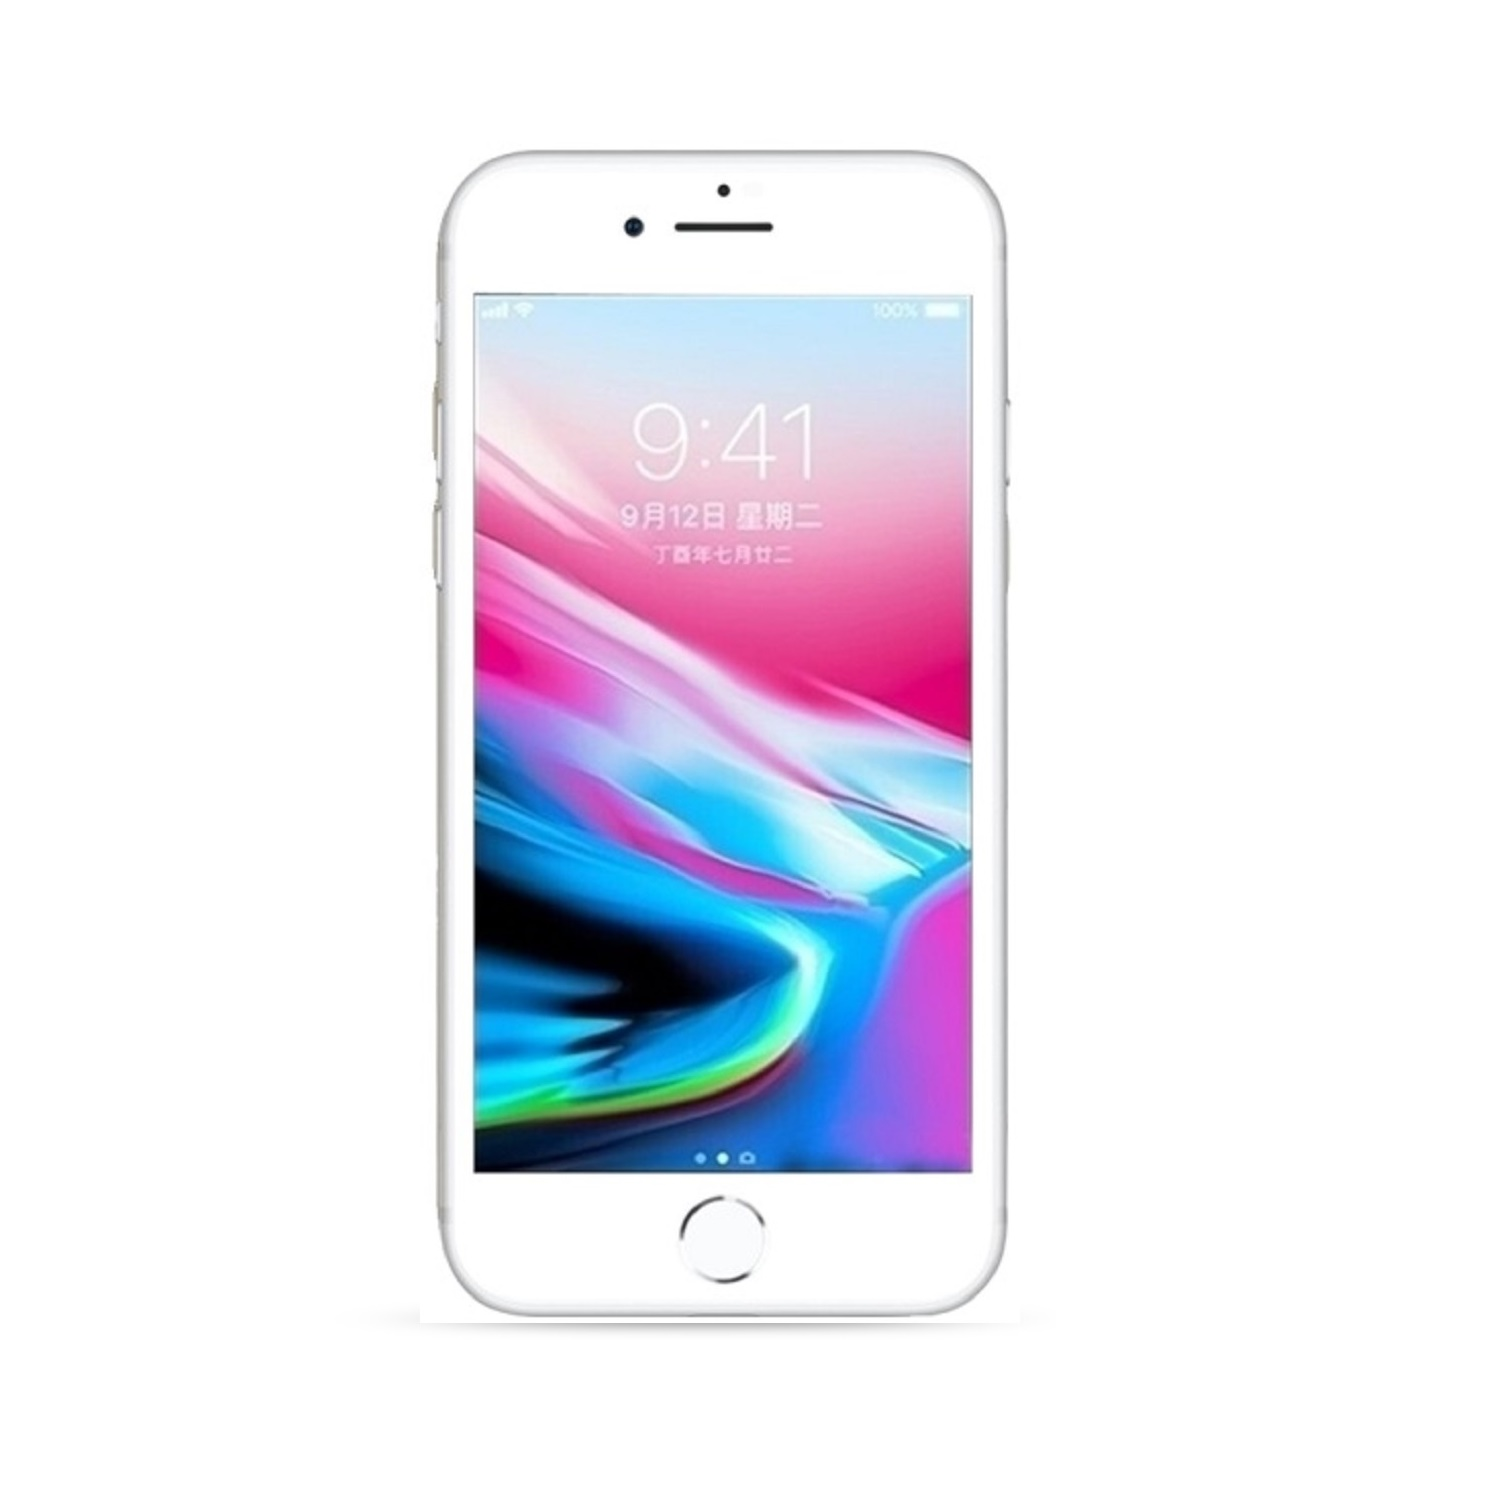 8) 9H KLAR COVER HD Schutzglas 4x Hartglas iPhone PROTECTORKING FULL Apple Displayschutzfolie(für